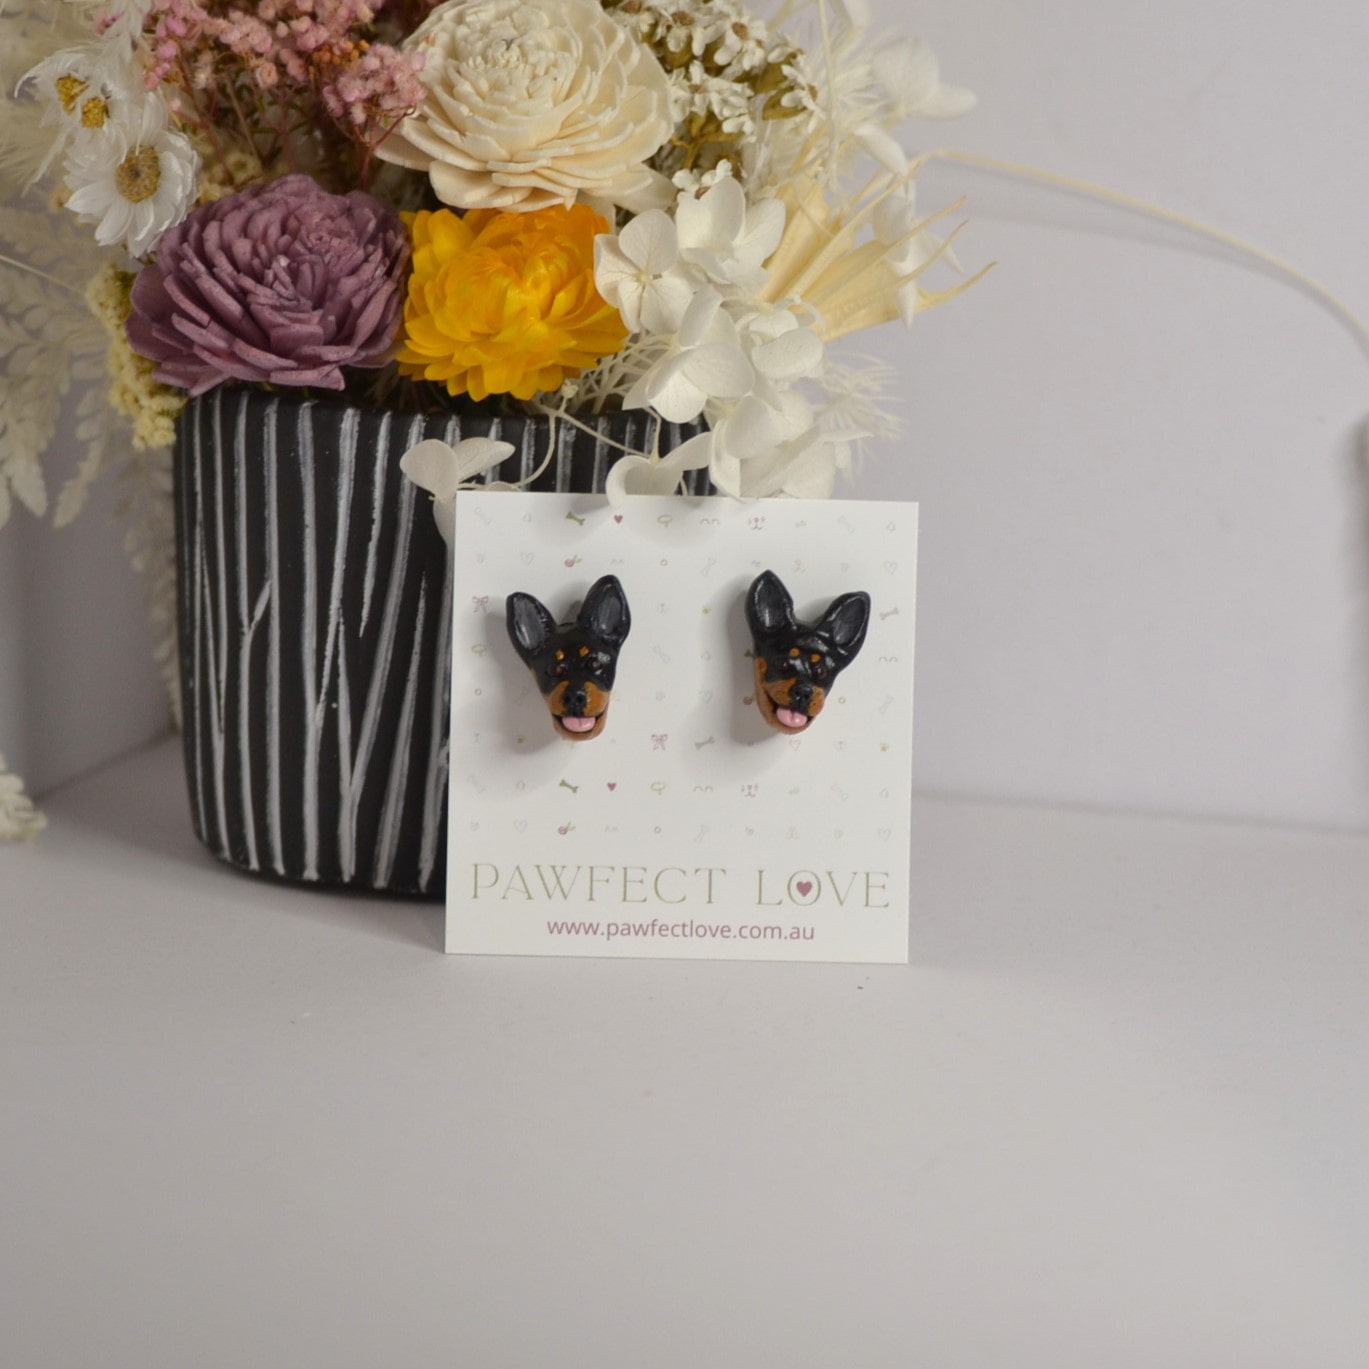 Handmade kelpie stud earrings by Pawfect Love, positioned in front of dried flower arrangement